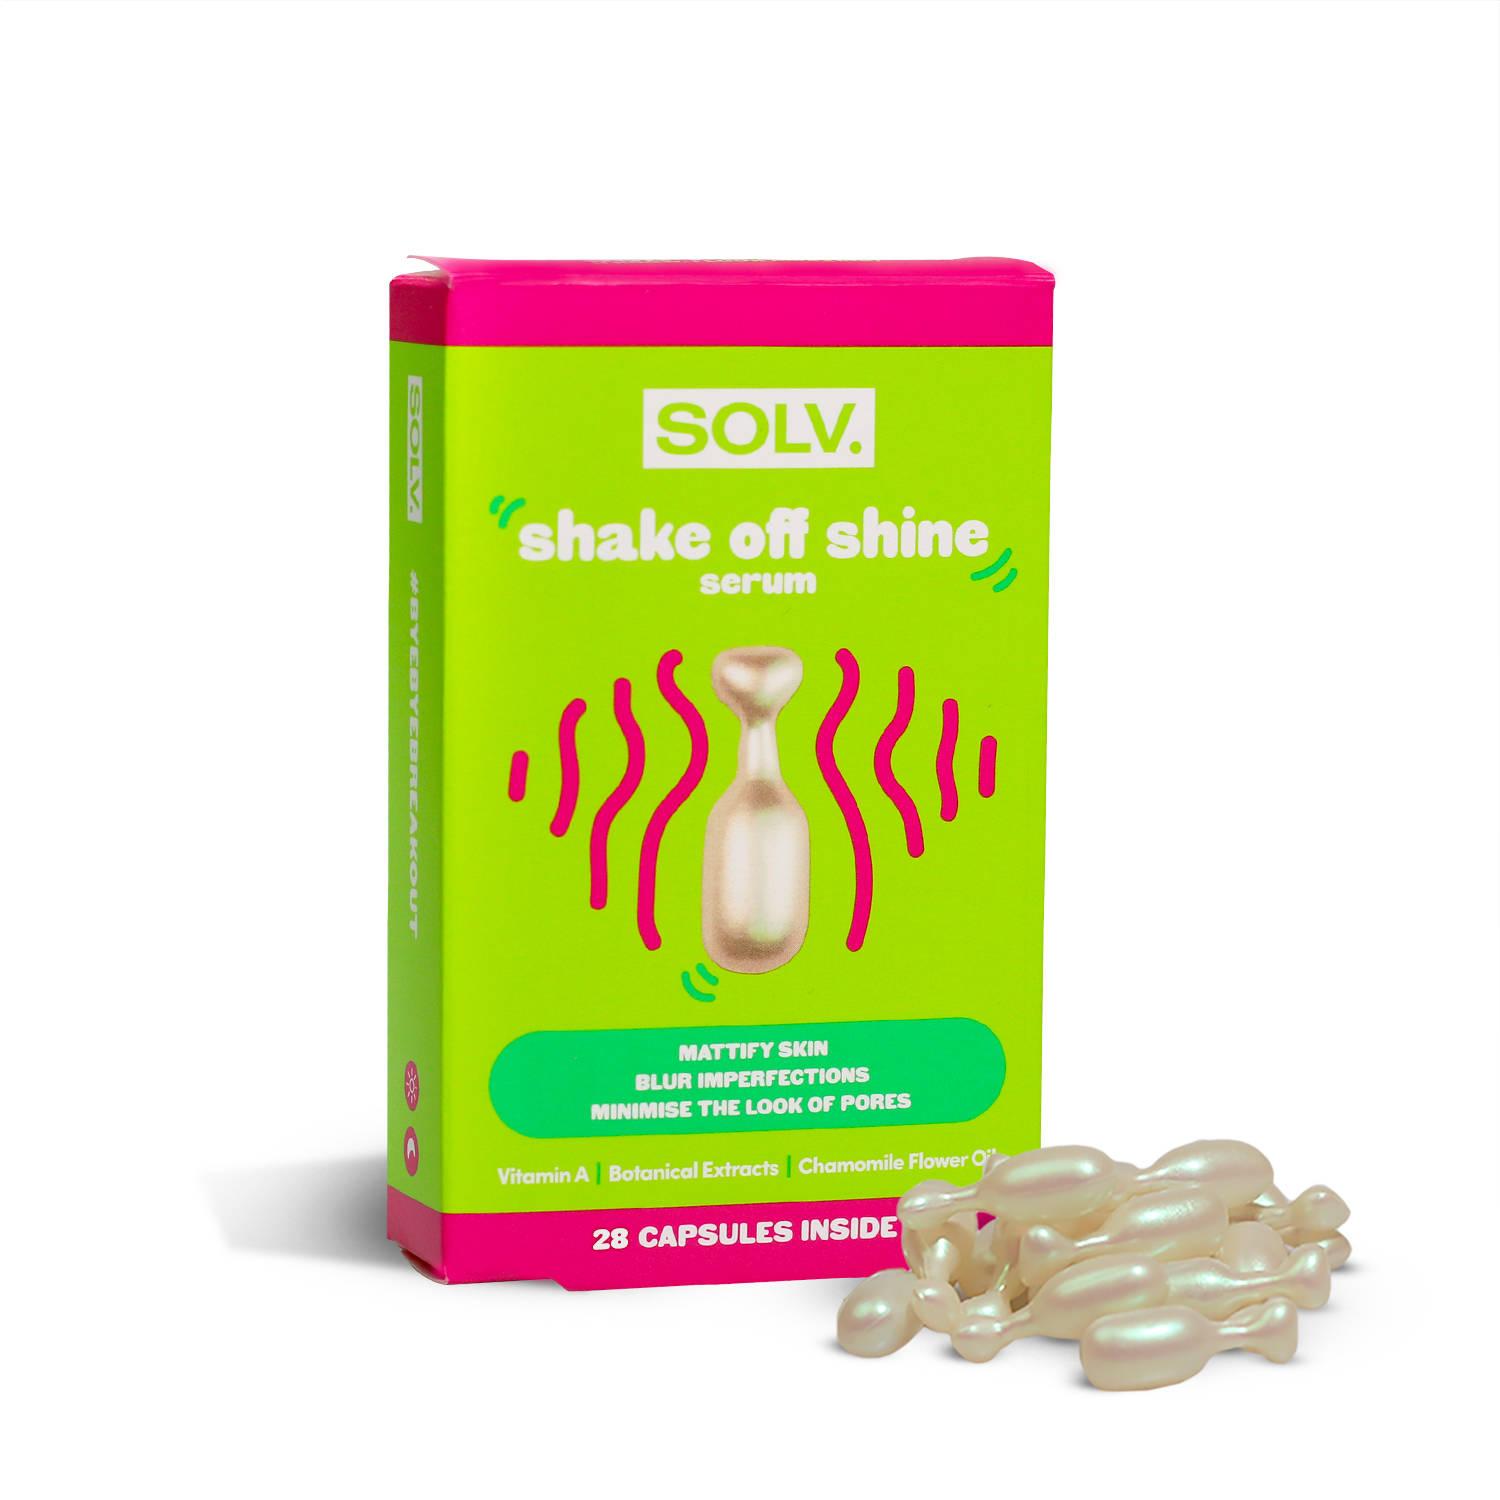 SOLV. Shake off shine serum 28 capsules SEPHORA UK